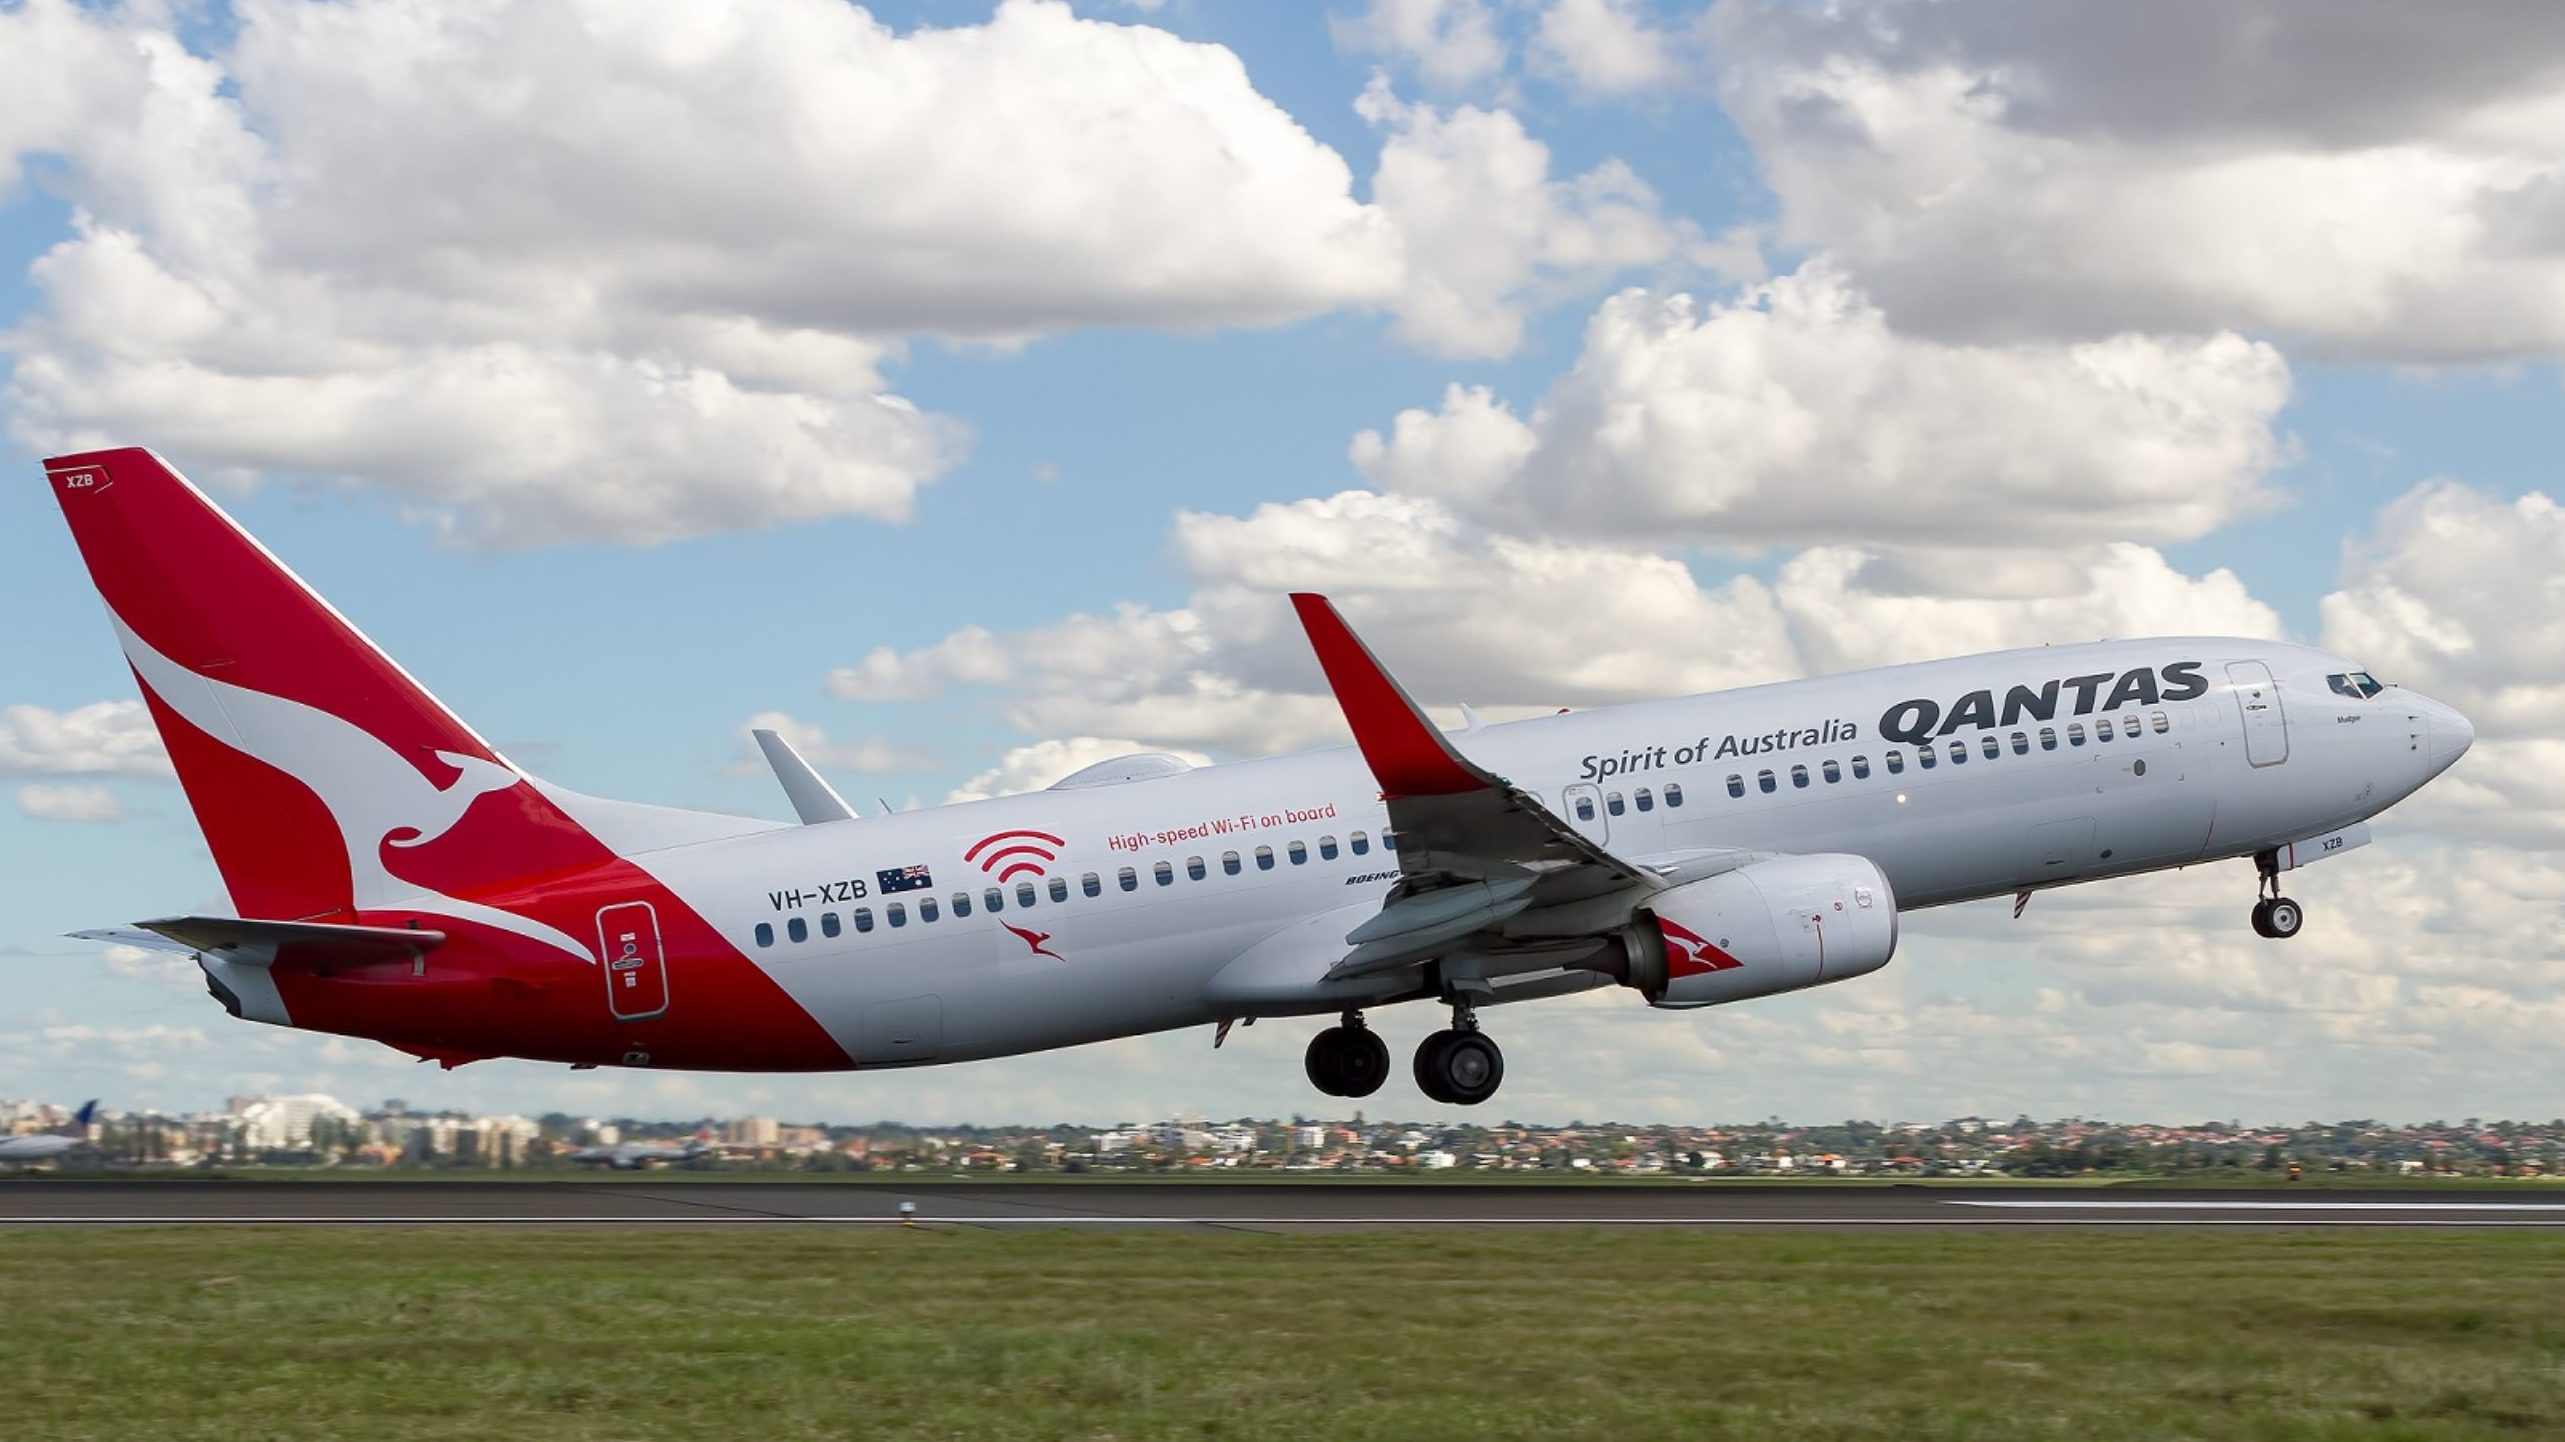 A Qantas jetliner takes off